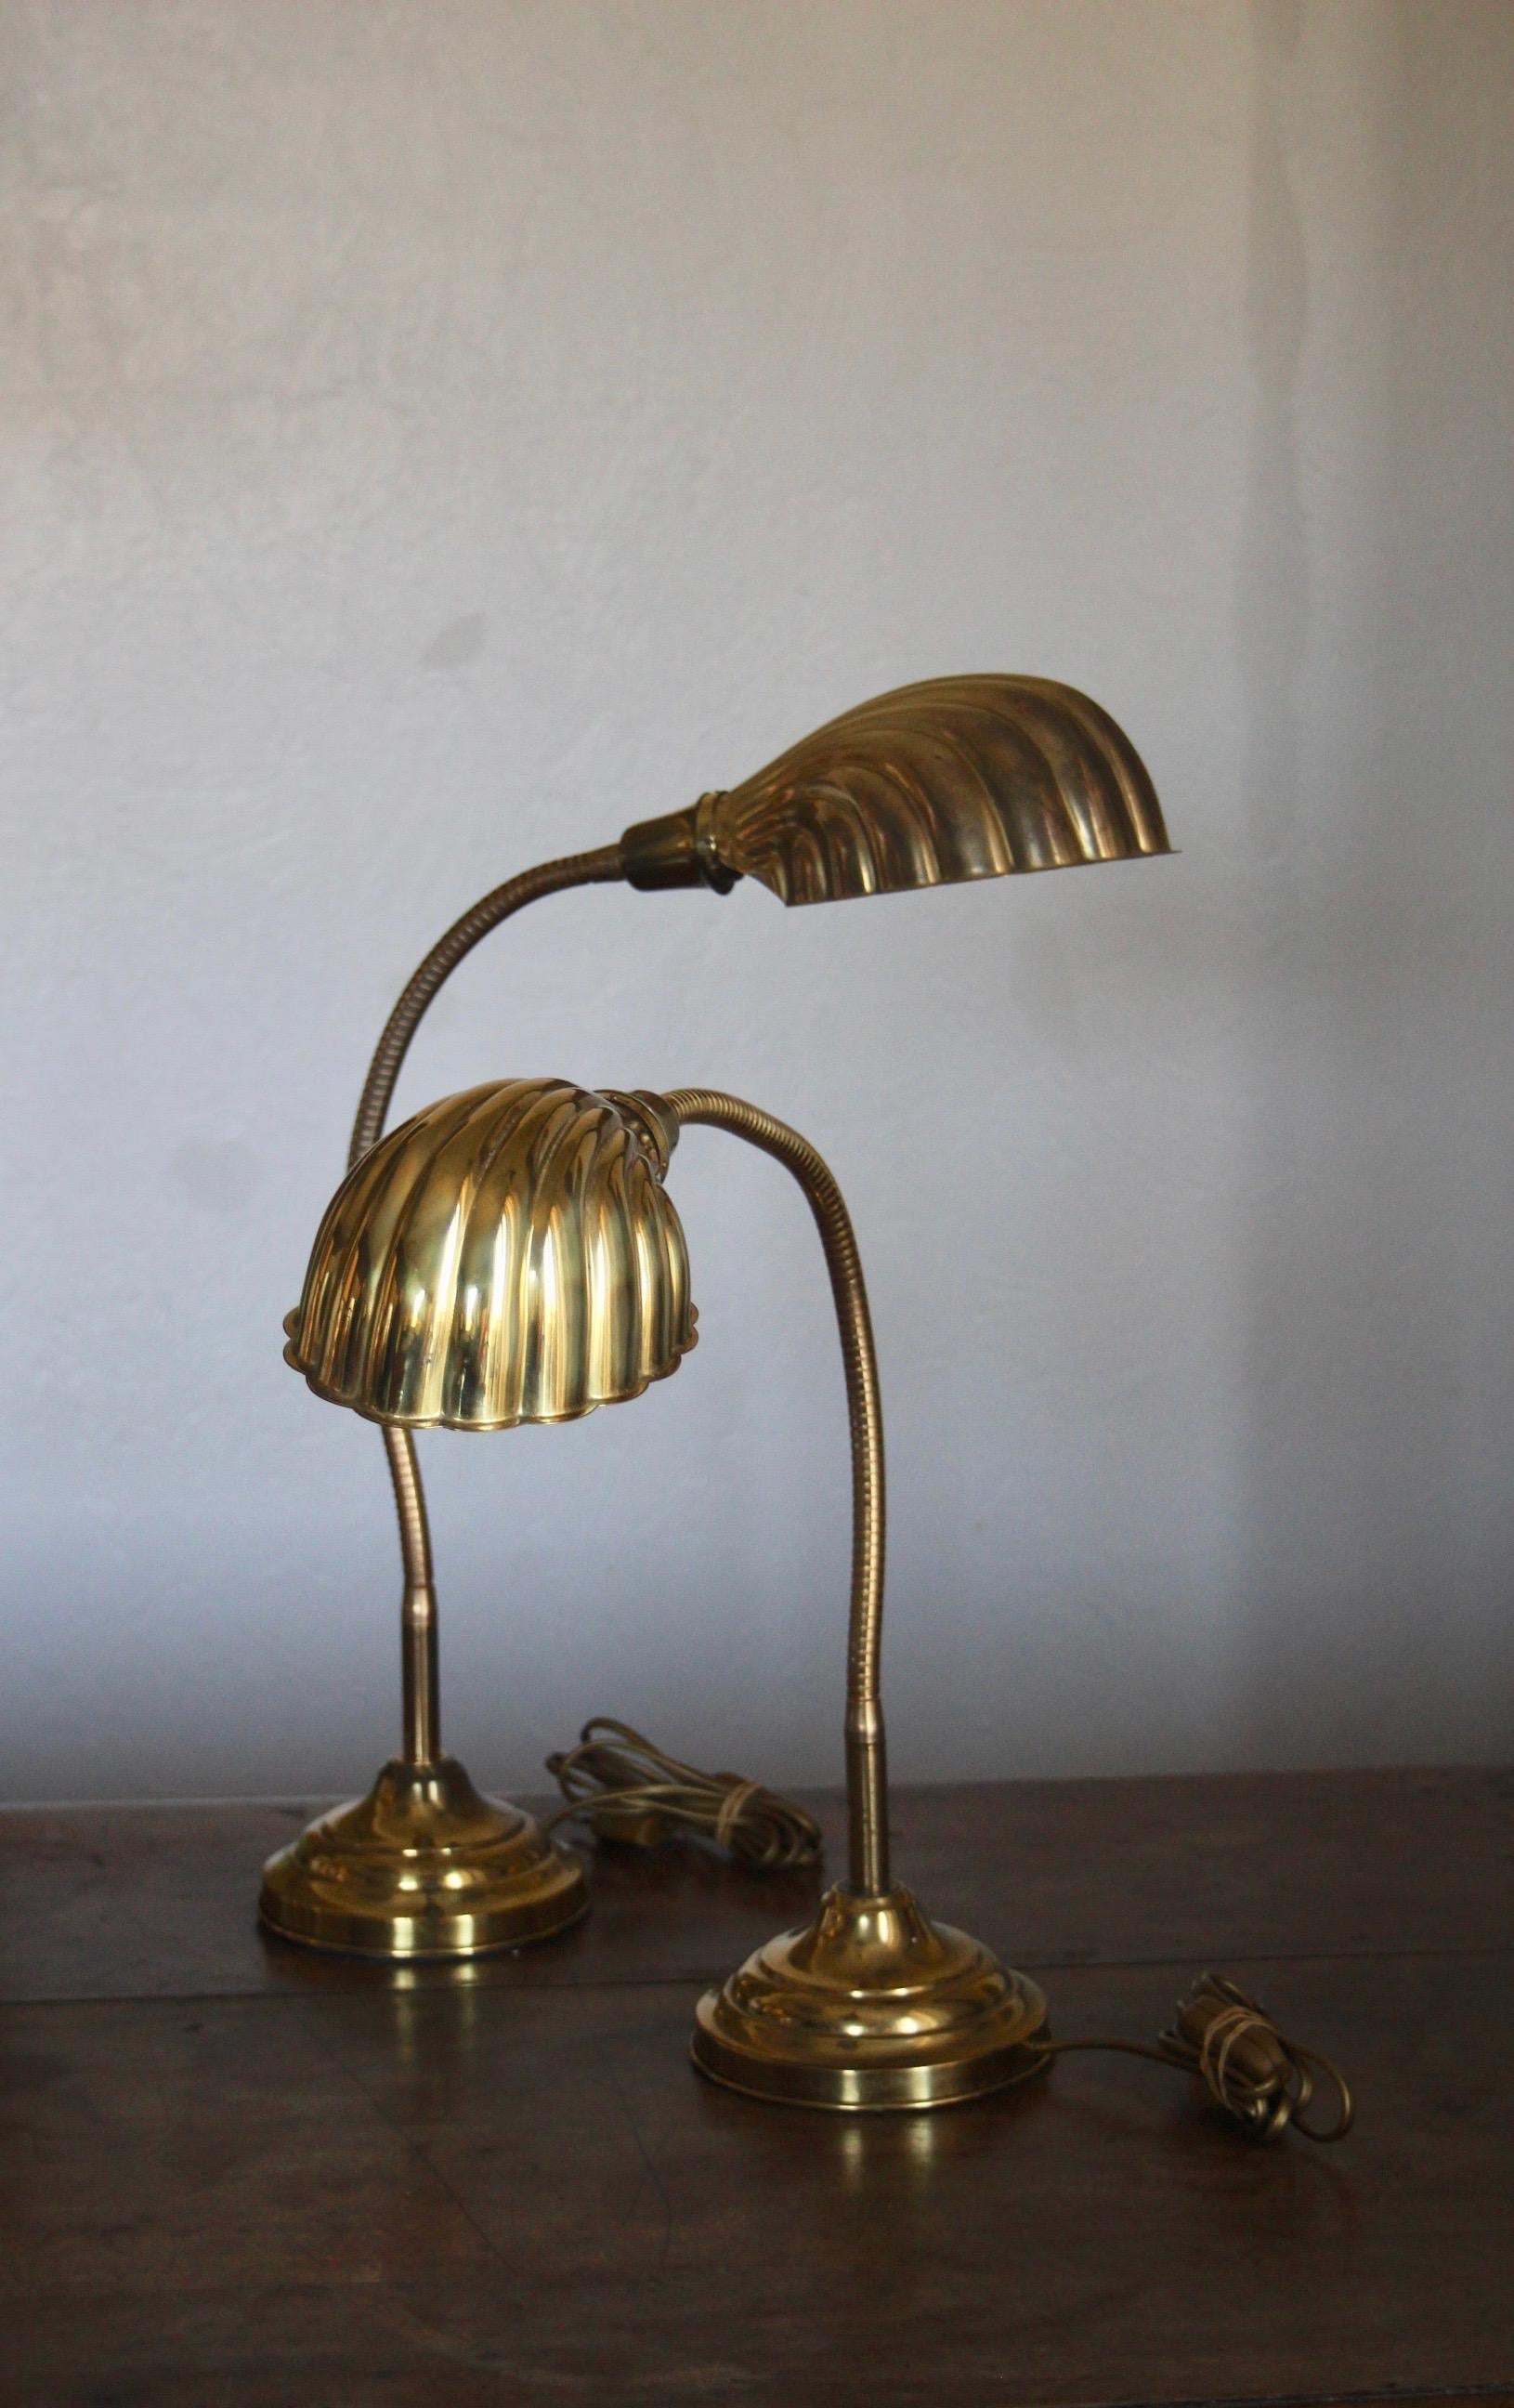 antique gooseneck brass lamp